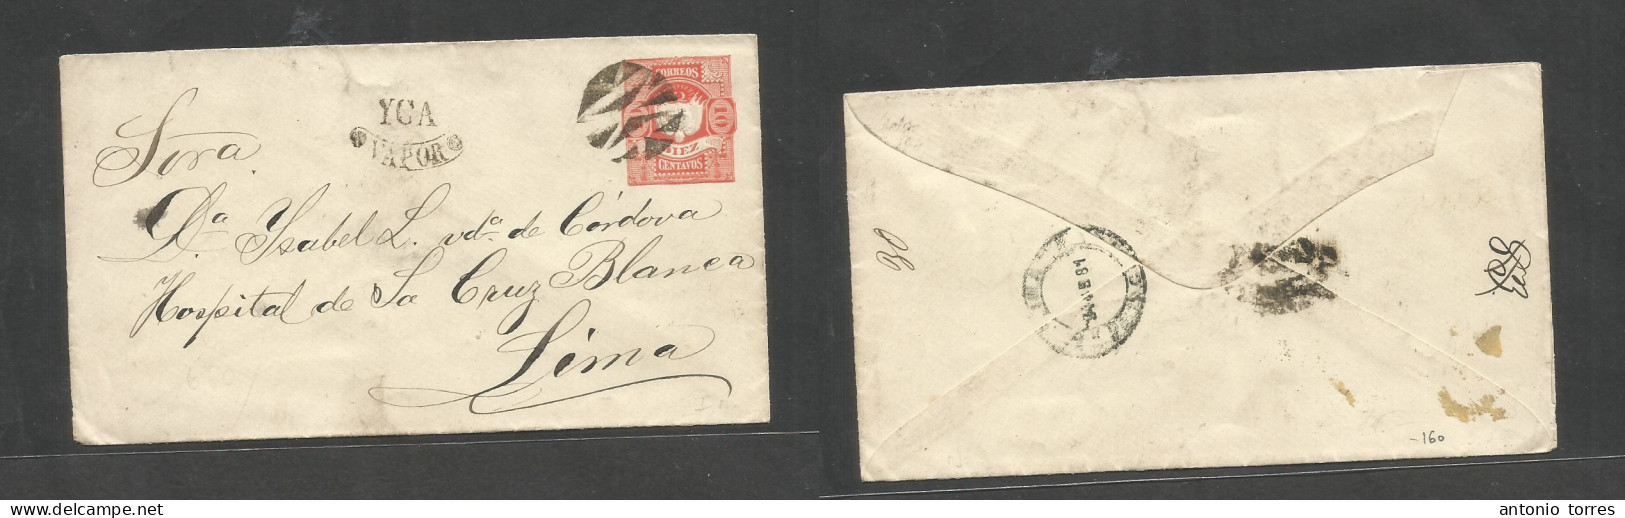 Peru. 1881 Yca - Lima (24 March) 10c Vermilion Embossed Stationary Envelope, Depart Cork Cancel + "VIA VAPOR" Illustrate - Peru